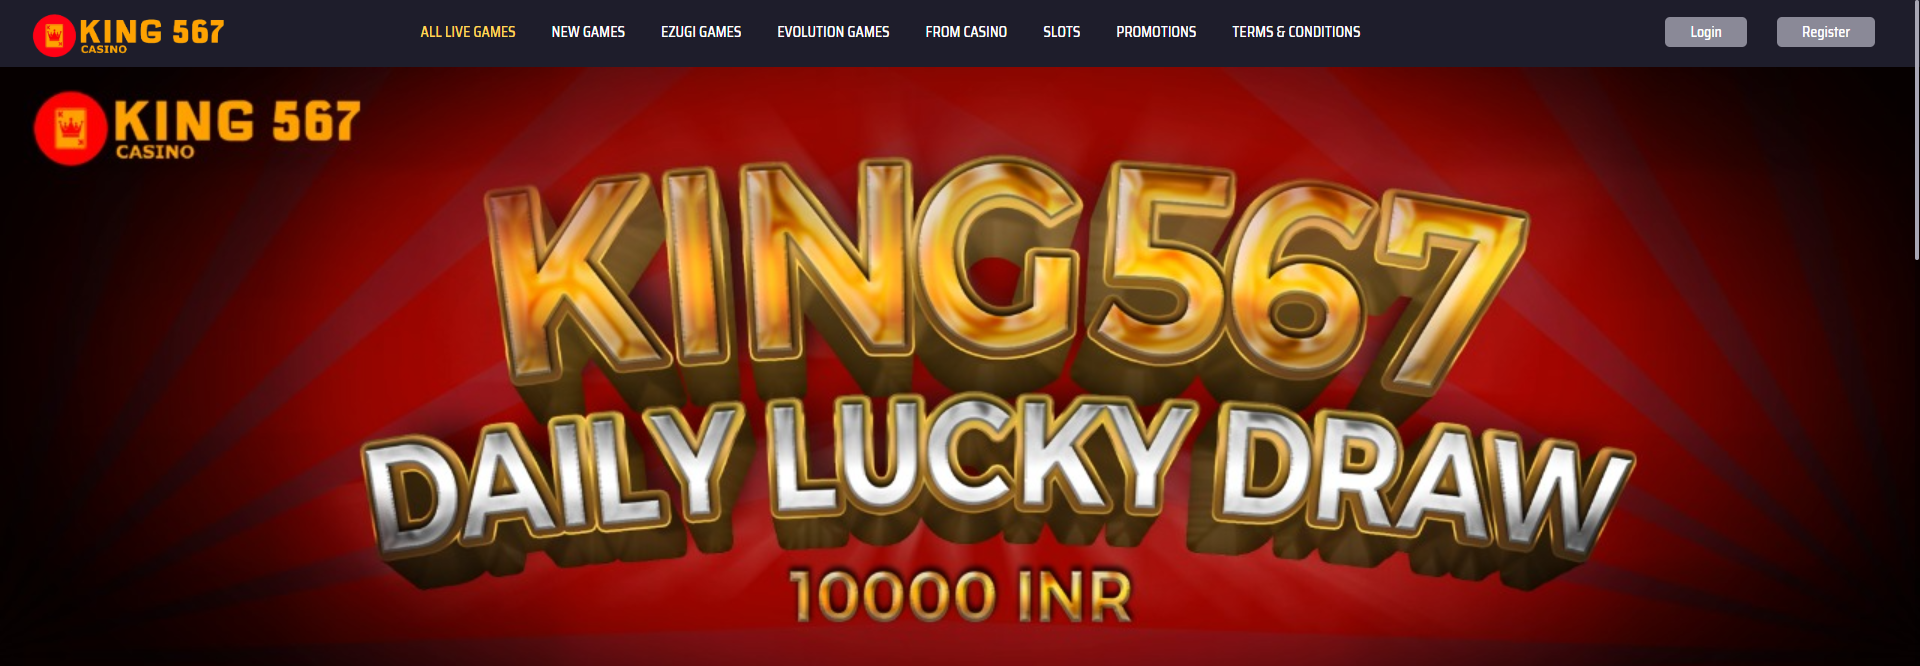 King567 website and bonus